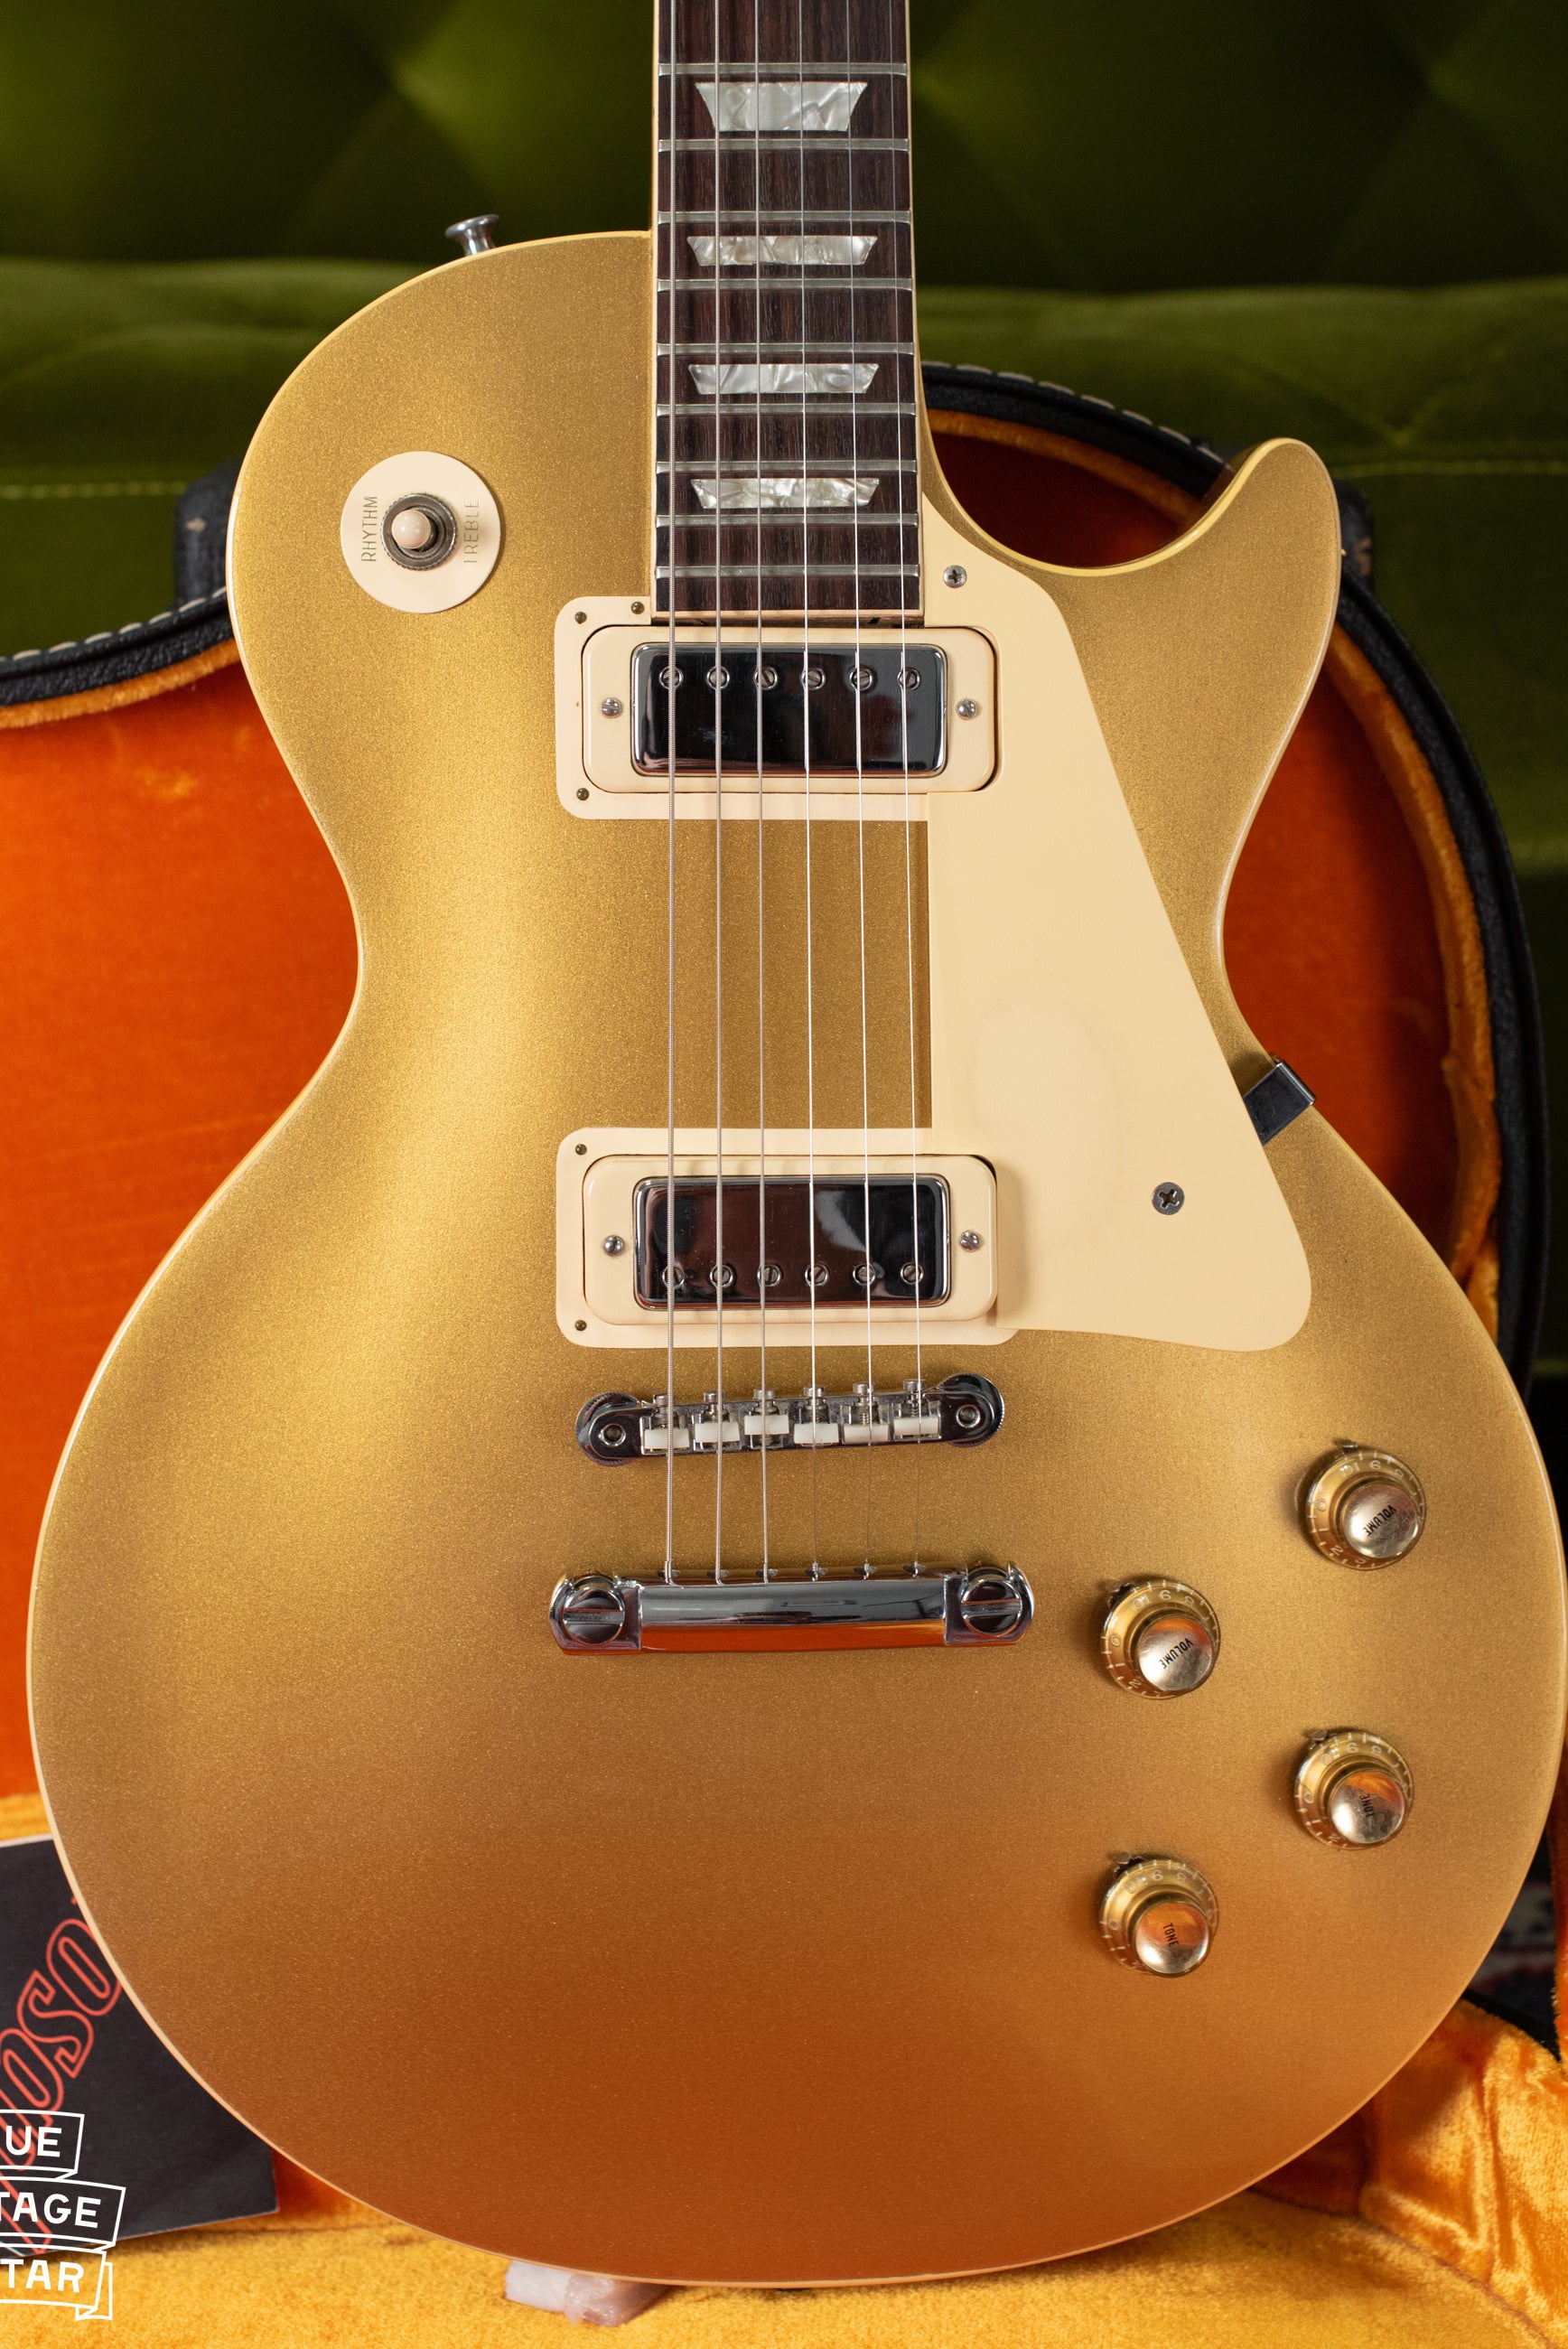 1971 Gibson Les Paul Deluxe goldtop guitar